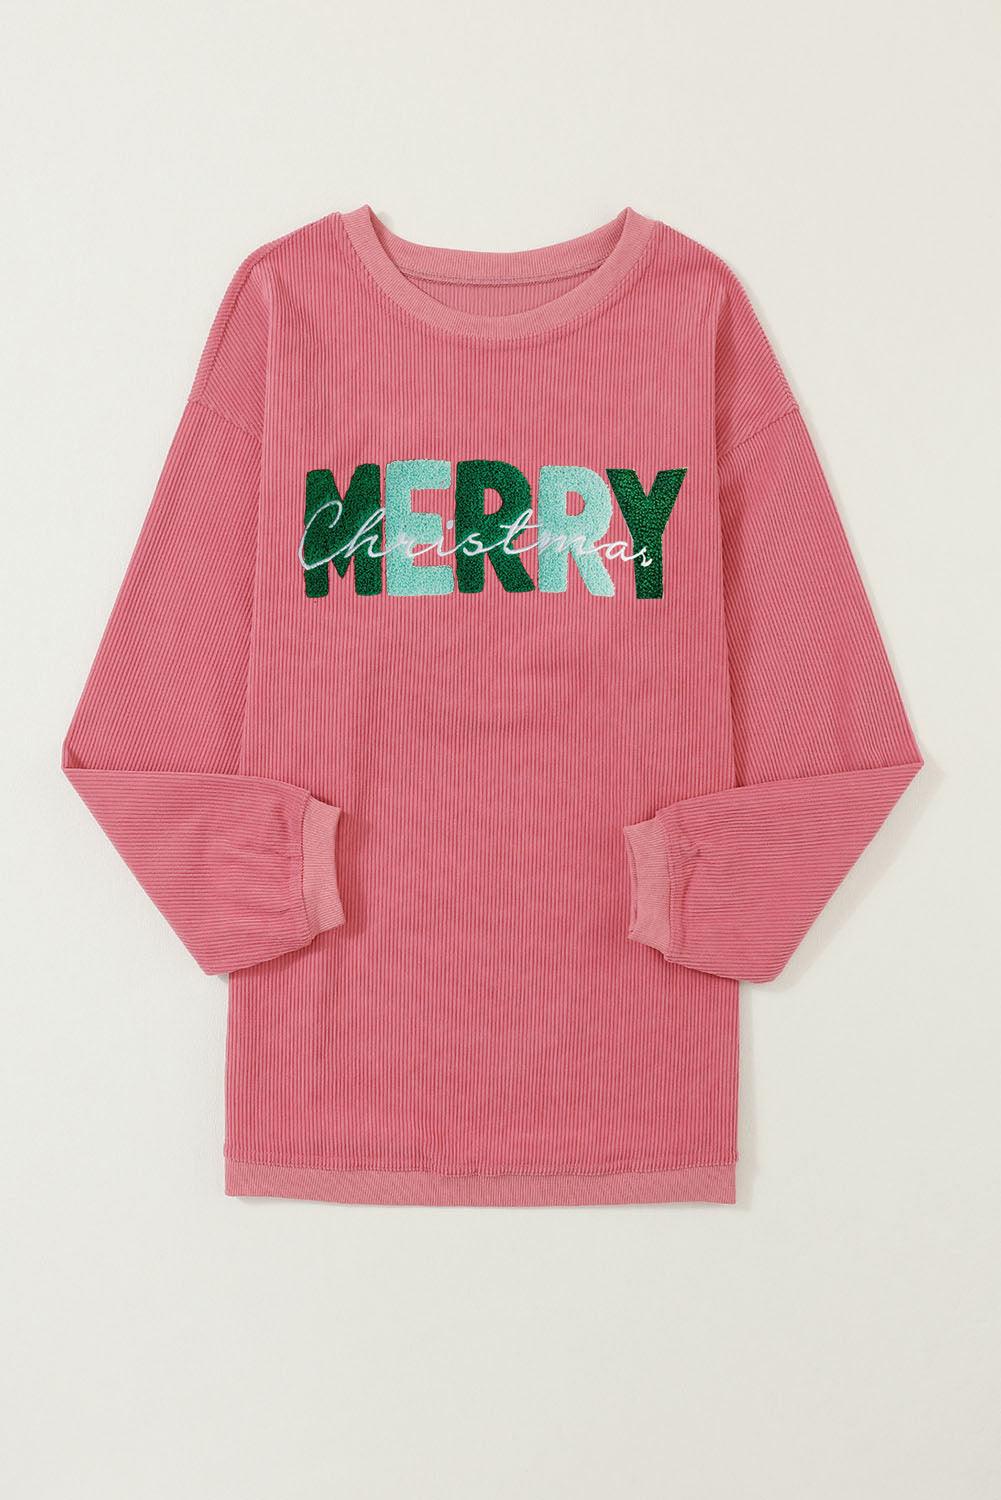 Strawberry Pink MERRY Christmas Corded Pullover Sweatshirt - L & M Kee, LLC